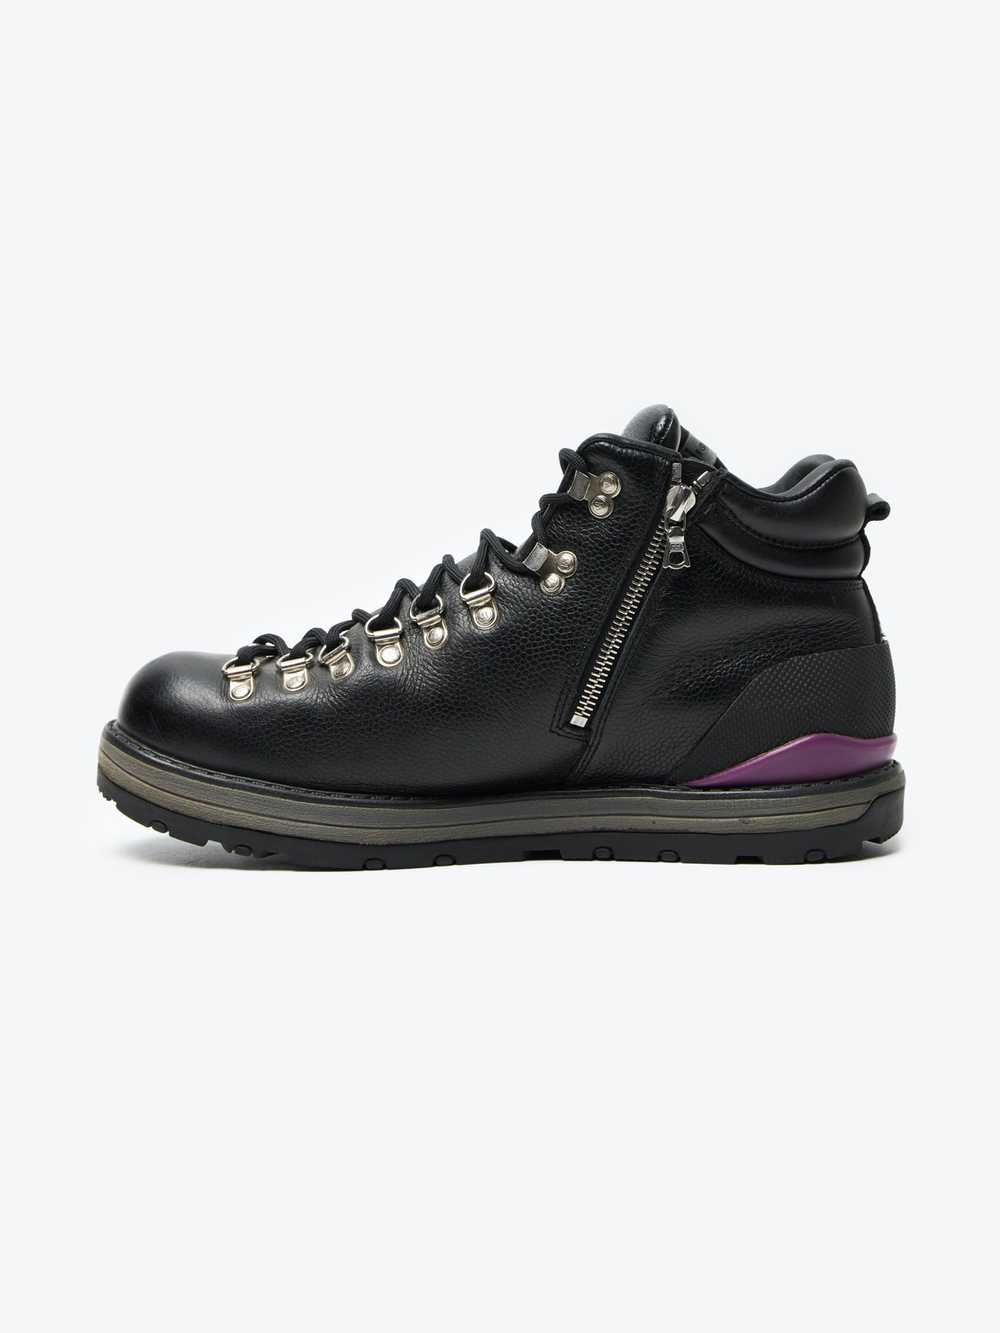 Visvim Black Hiking Detailed Leather Boots - image 2